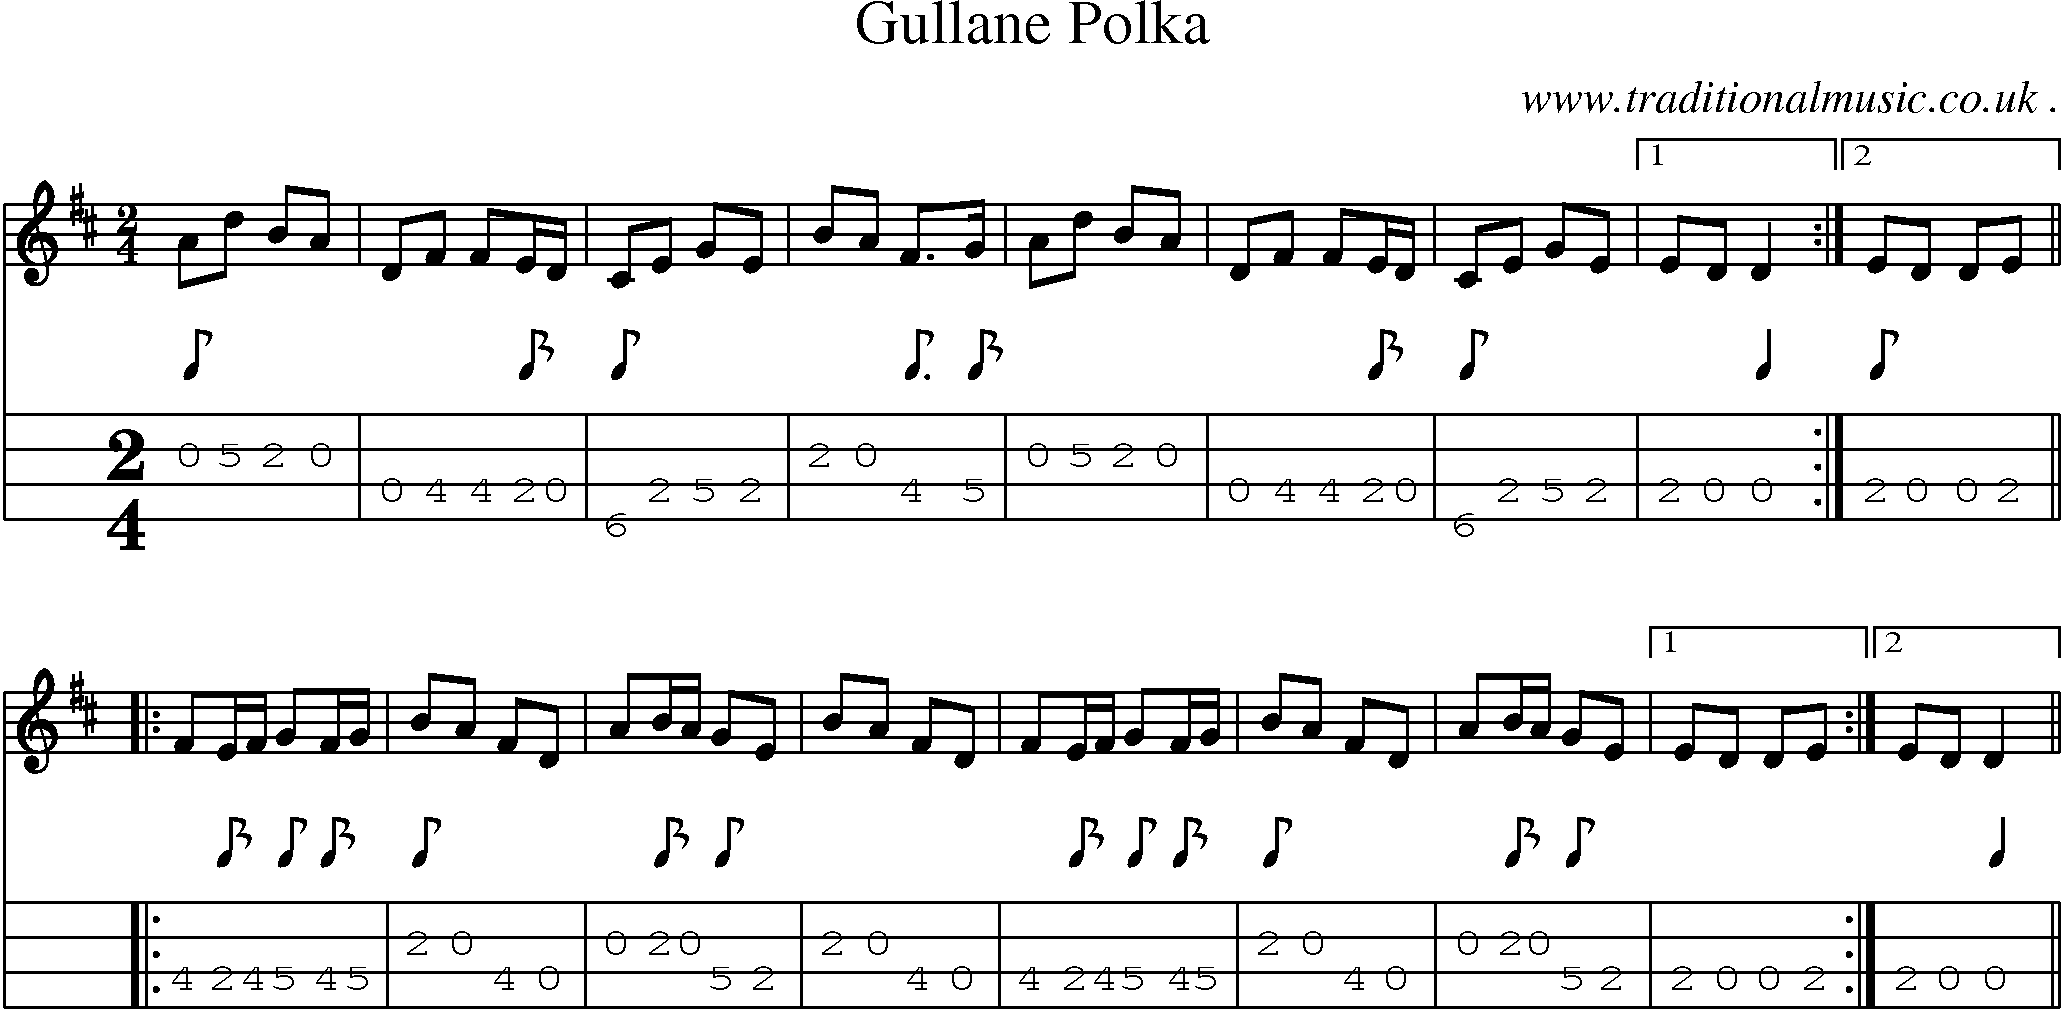 Sheet-Music and Mandolin Tabs for Gullane Polka